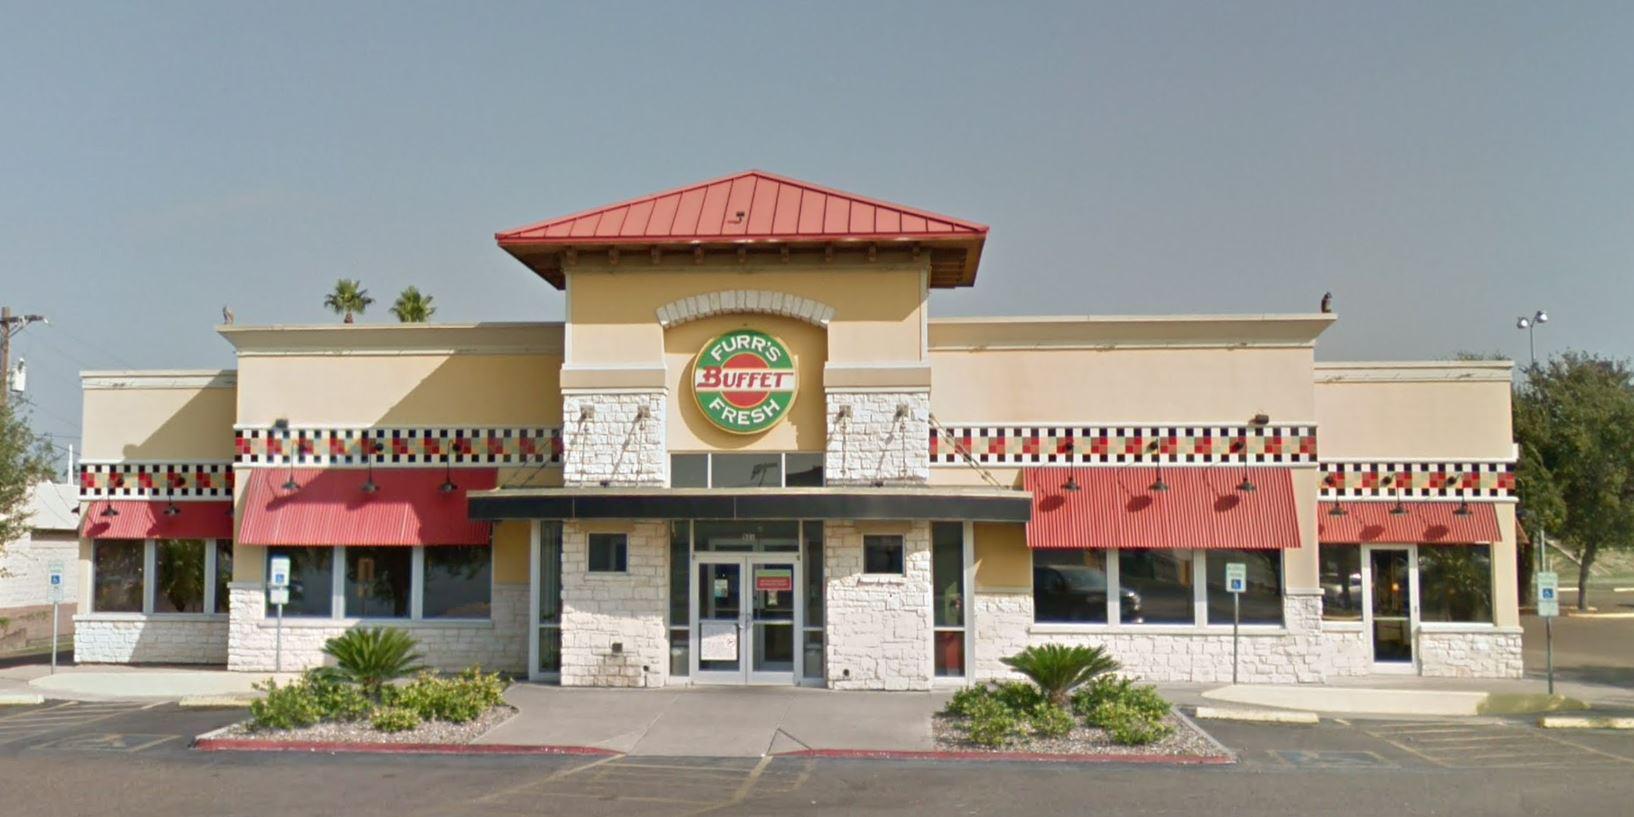 San Antonio-area restaurant operators 'siphoned' millions from business:  suit